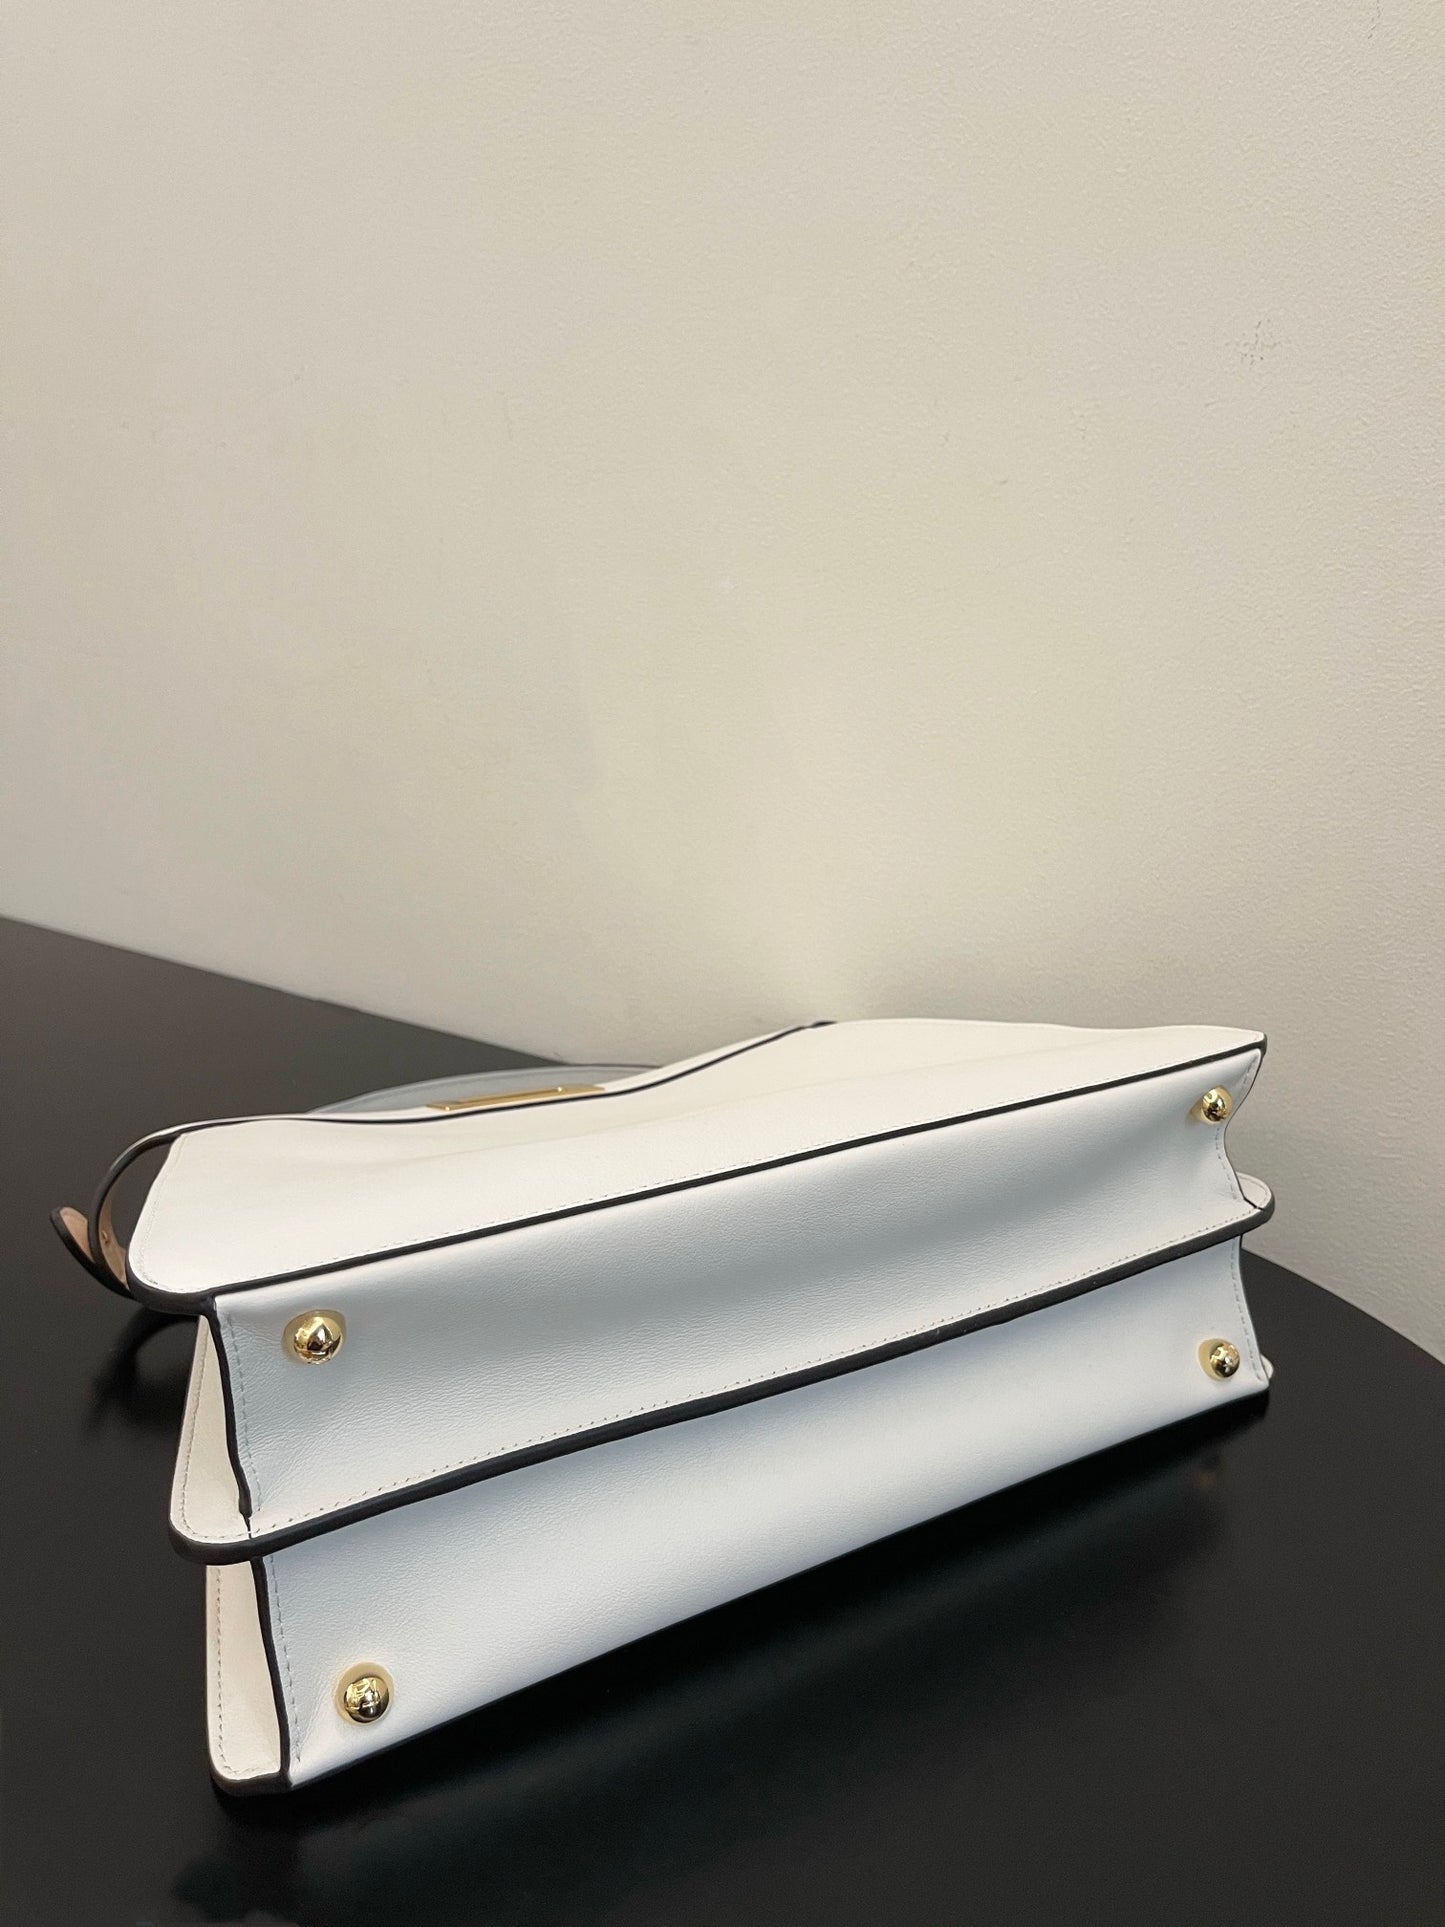 FI Peekaboo ISeeU Petite White Small Bag For Woman 20cm/8in